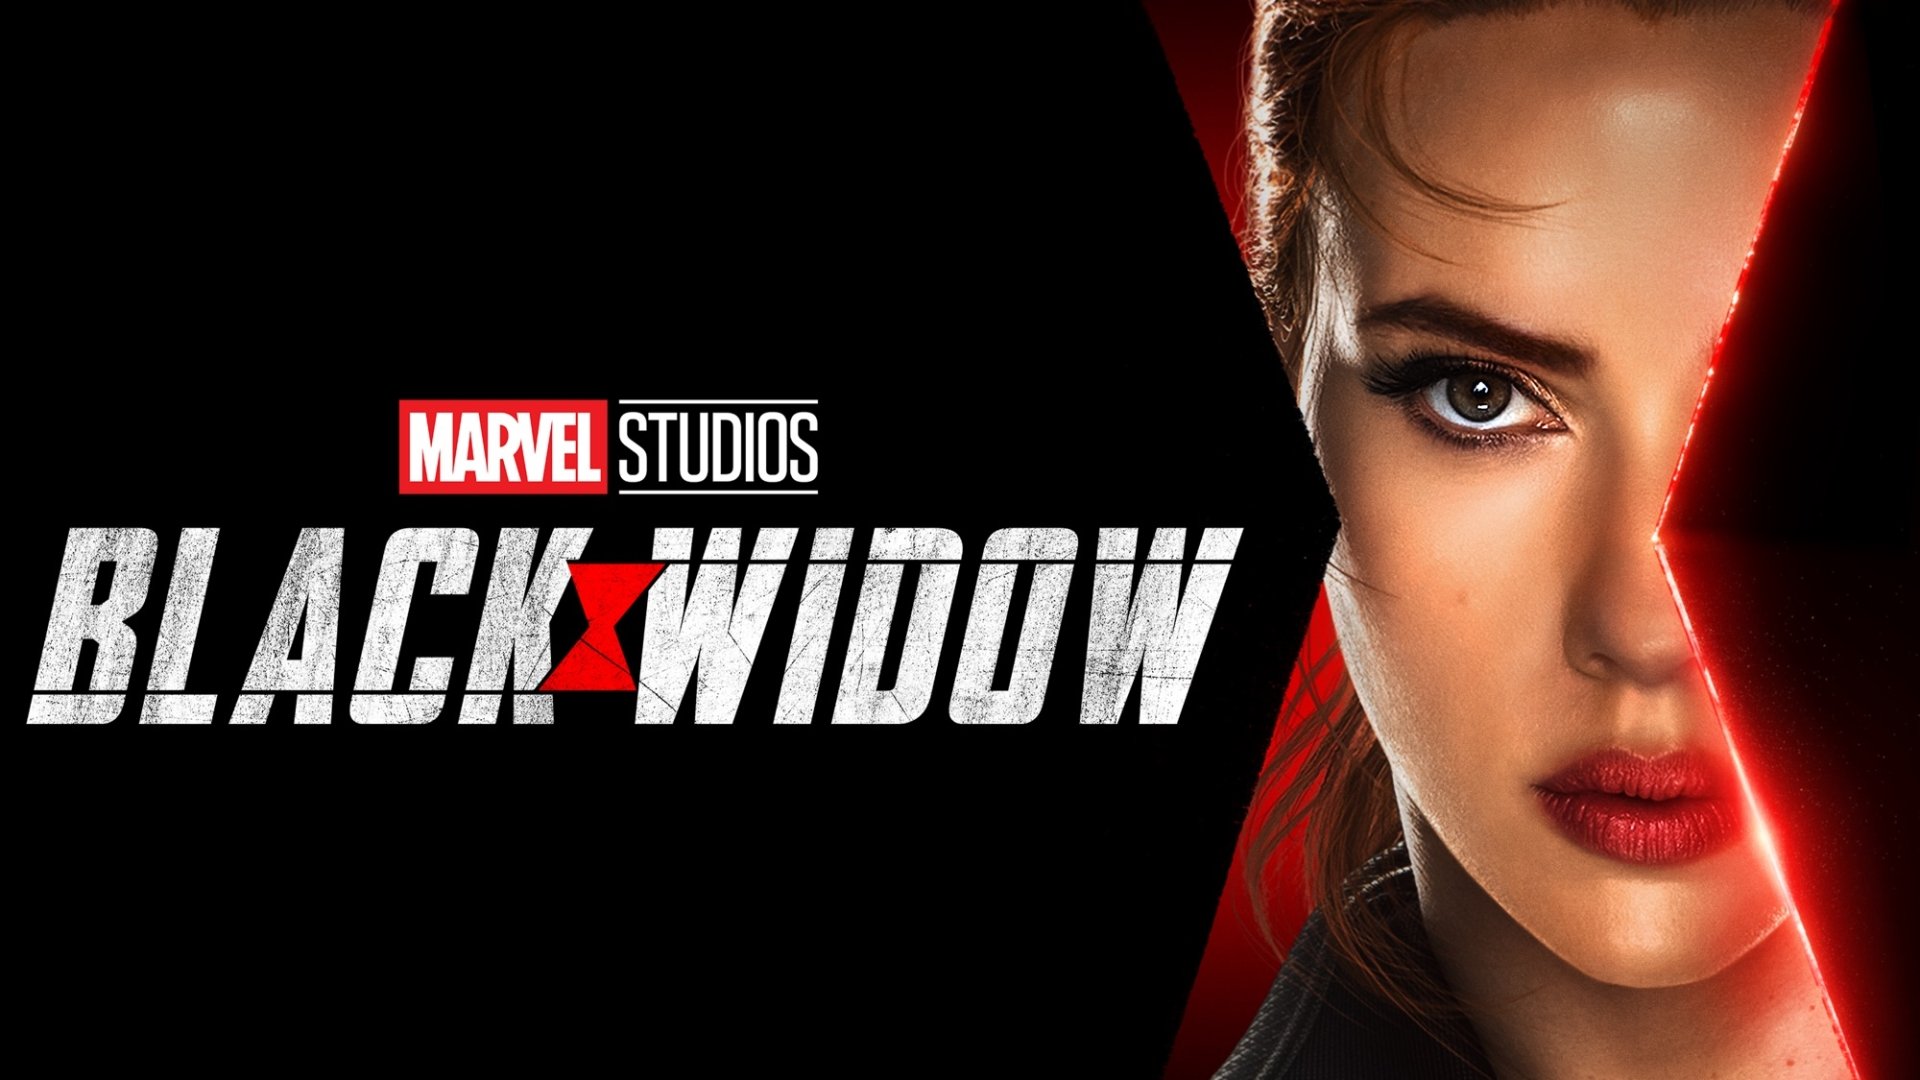 Scarlett Johansson Face Women Actress Red Lipstick Black Background Marvel Cinematic Universe Movies 1920x1080